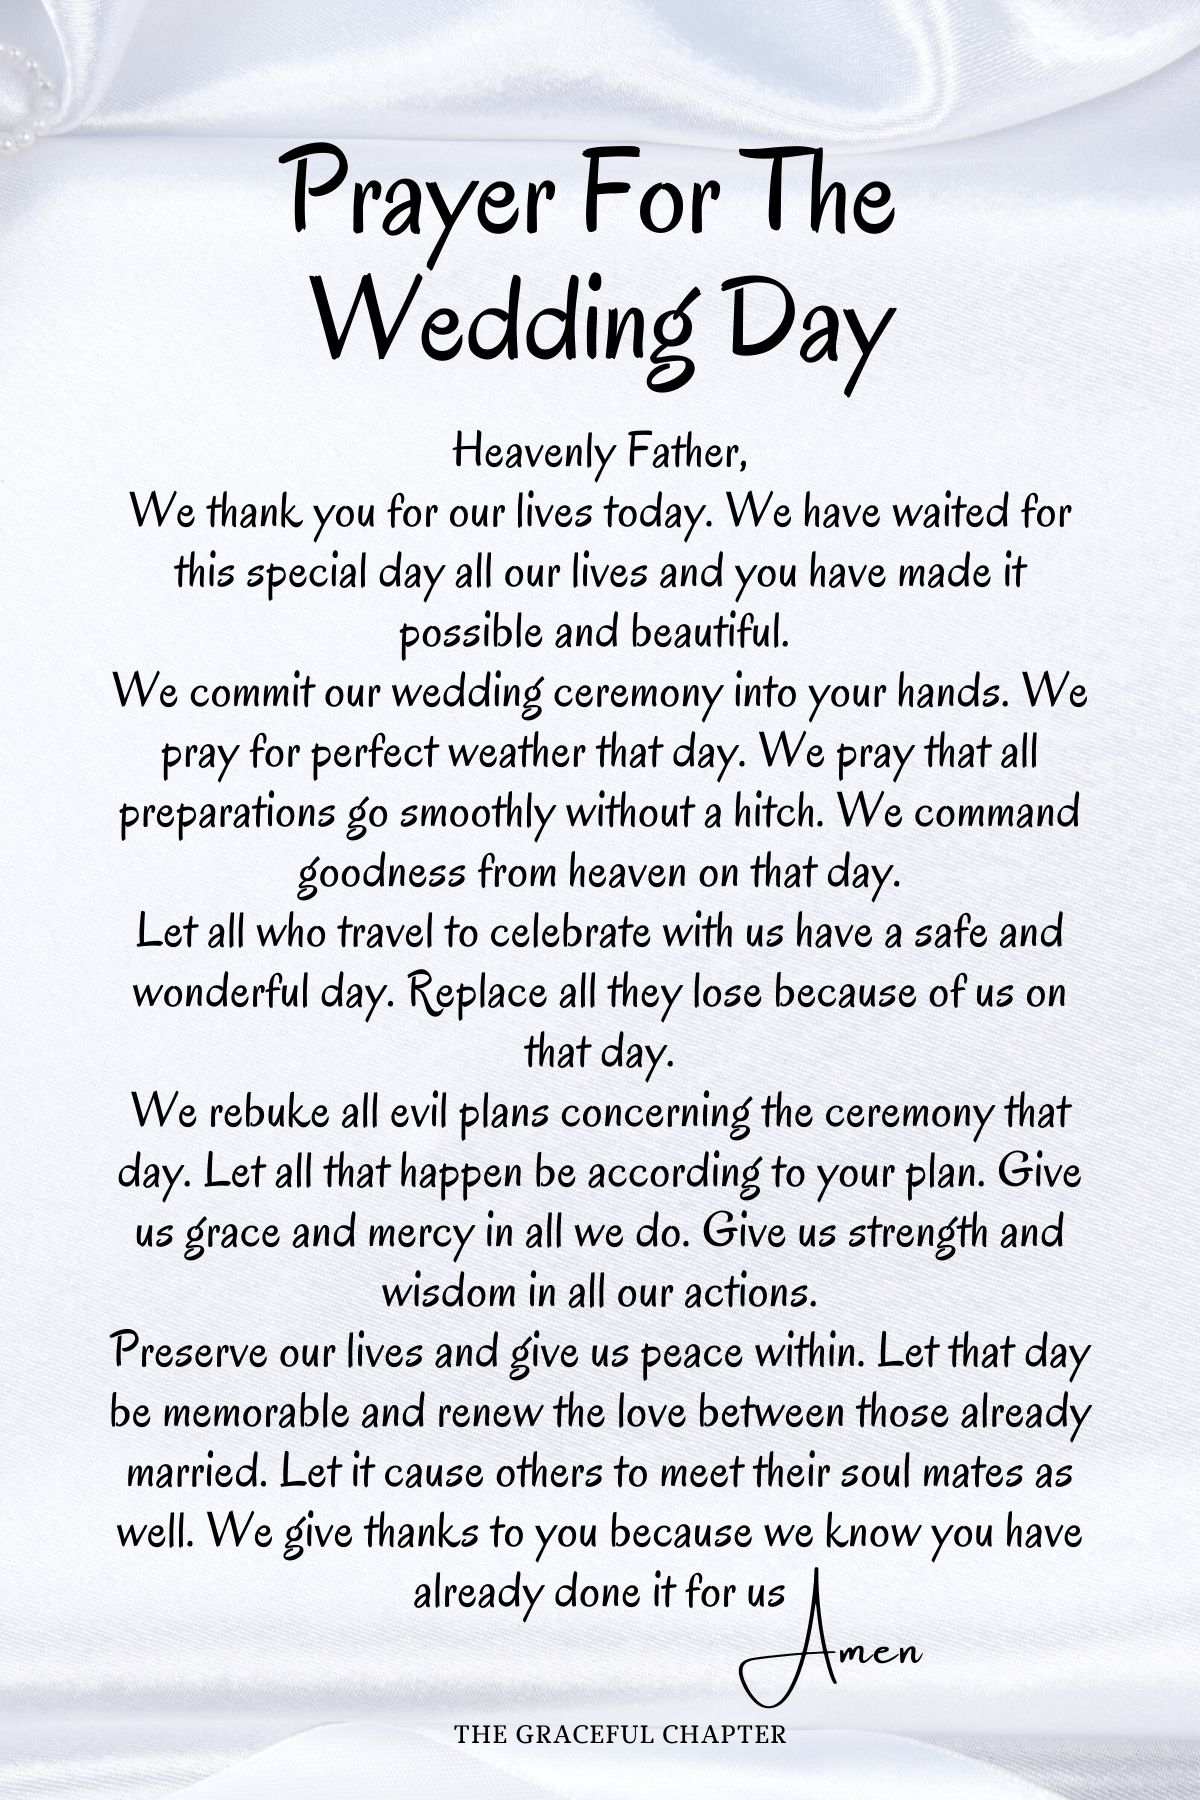 Prayer for the wedding day - prayers for wedding